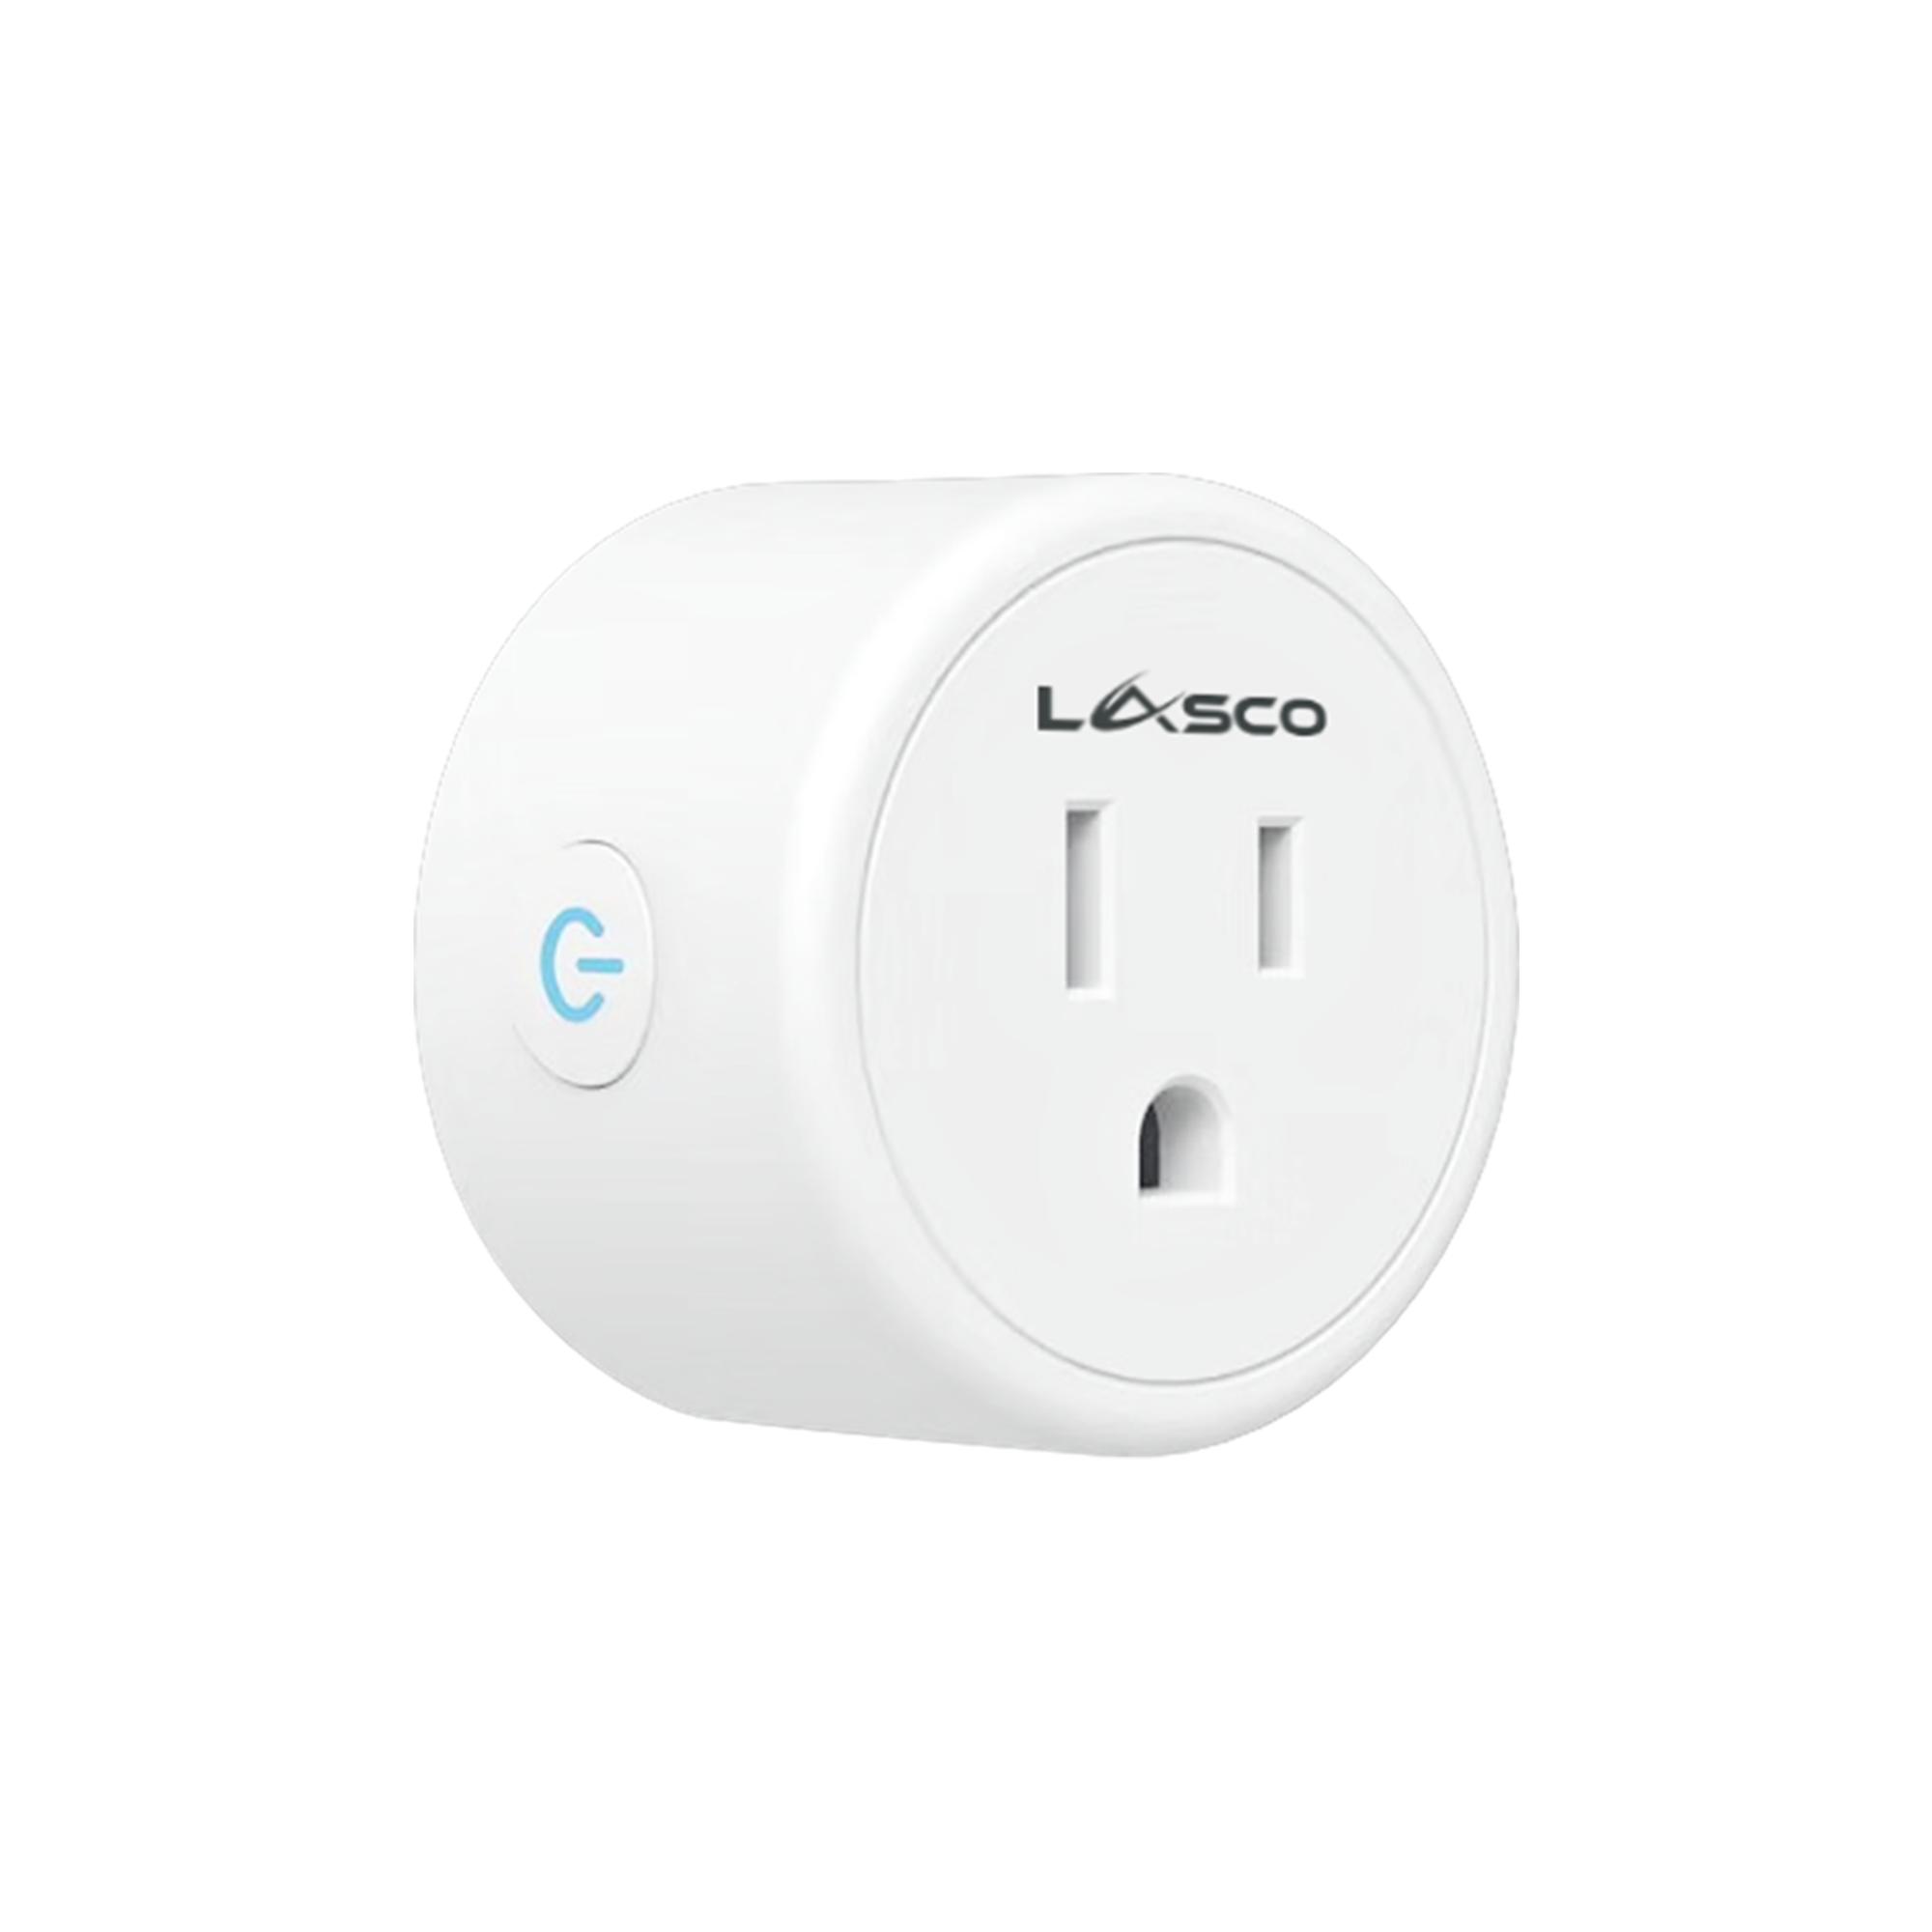 Lasco-Eco-Plug-Side